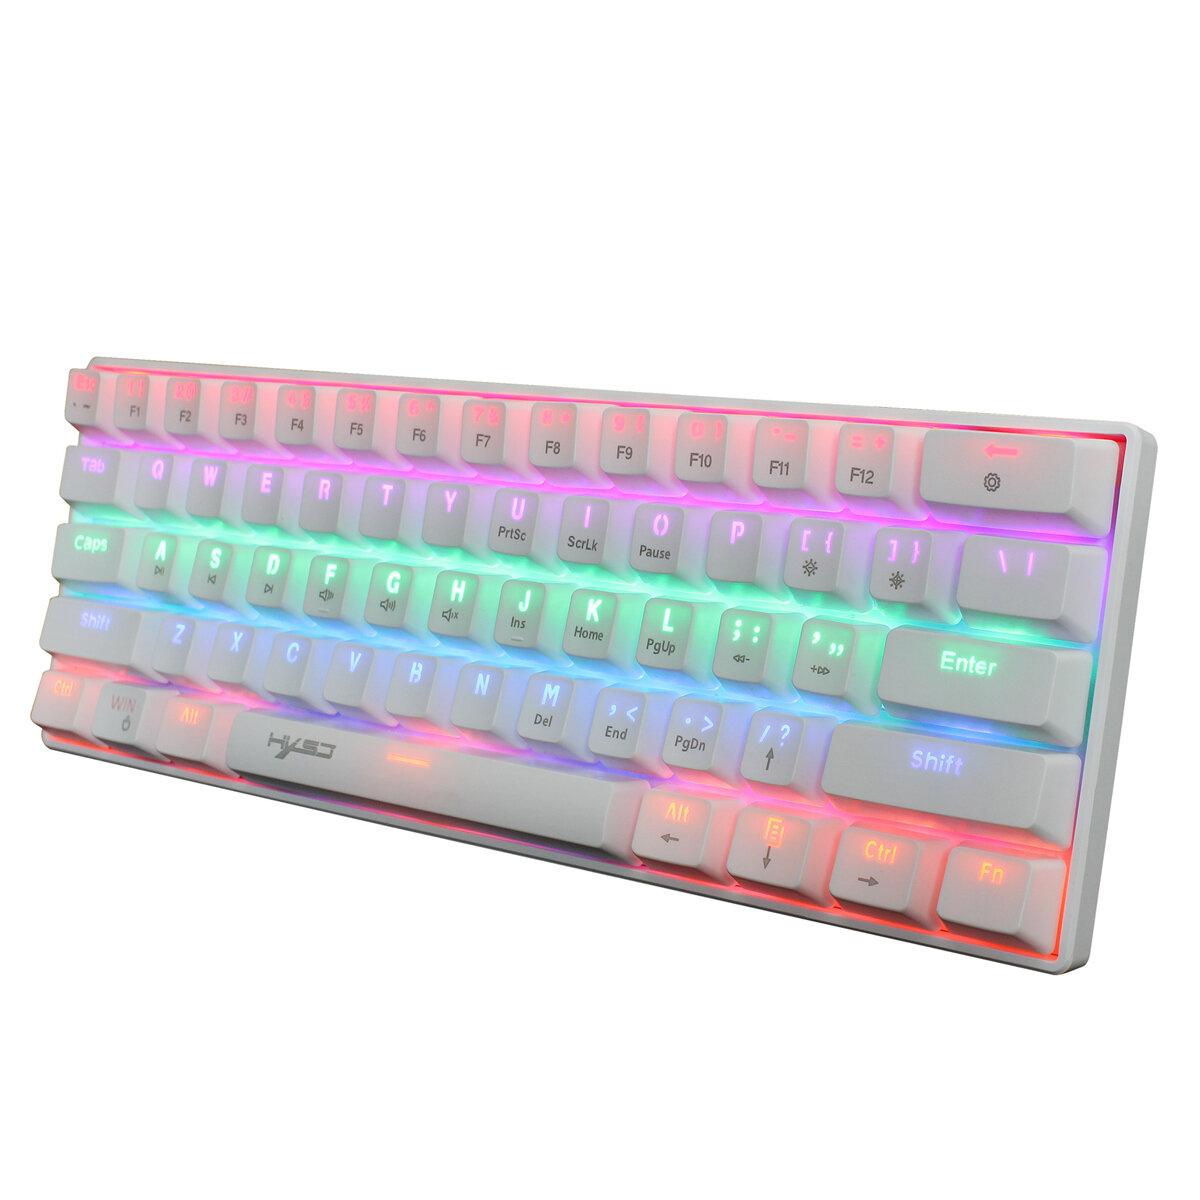 

HXSJ V900 61 Keys Mechanical Keyboard Blue Switch Mini Keyboard USB Wired Colorful LED Backlit Gaming Keyboard for PC La